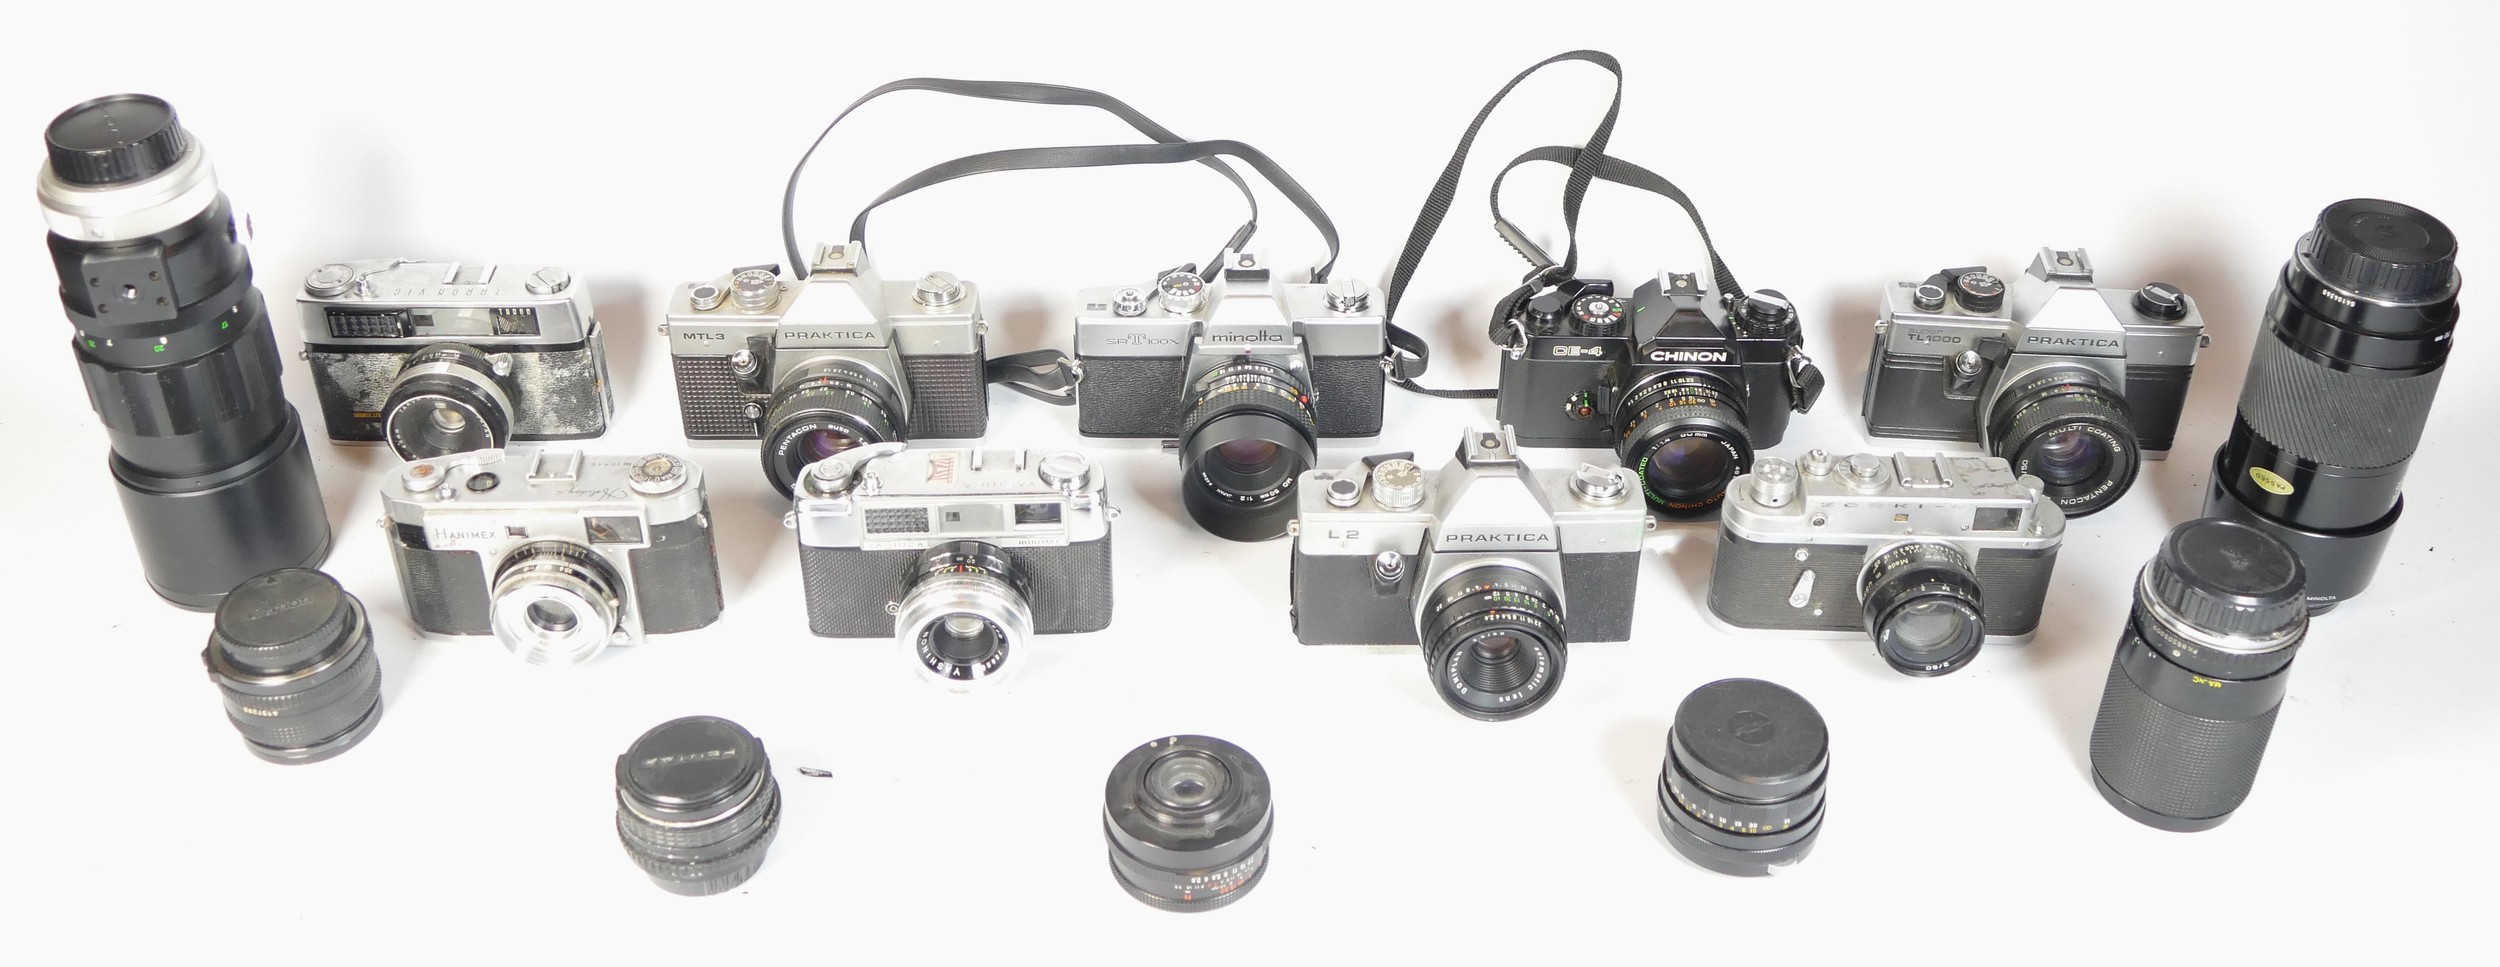 Nine SLR vintage film cameras to include a Chinon CE-4, a Praktica TL1000, a Hanimex Holiday II